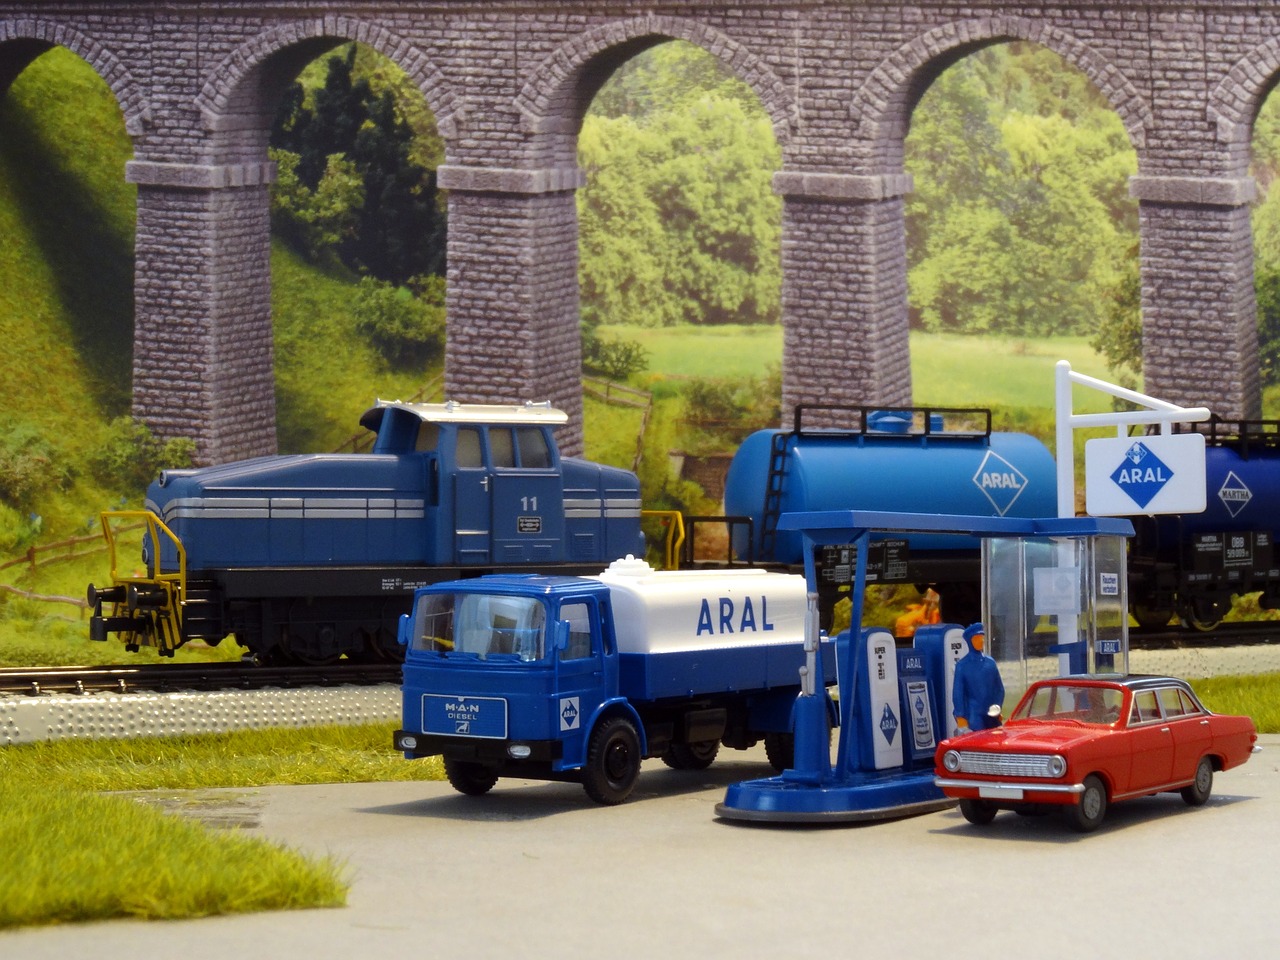 petrol stations  model cars  model train free photo